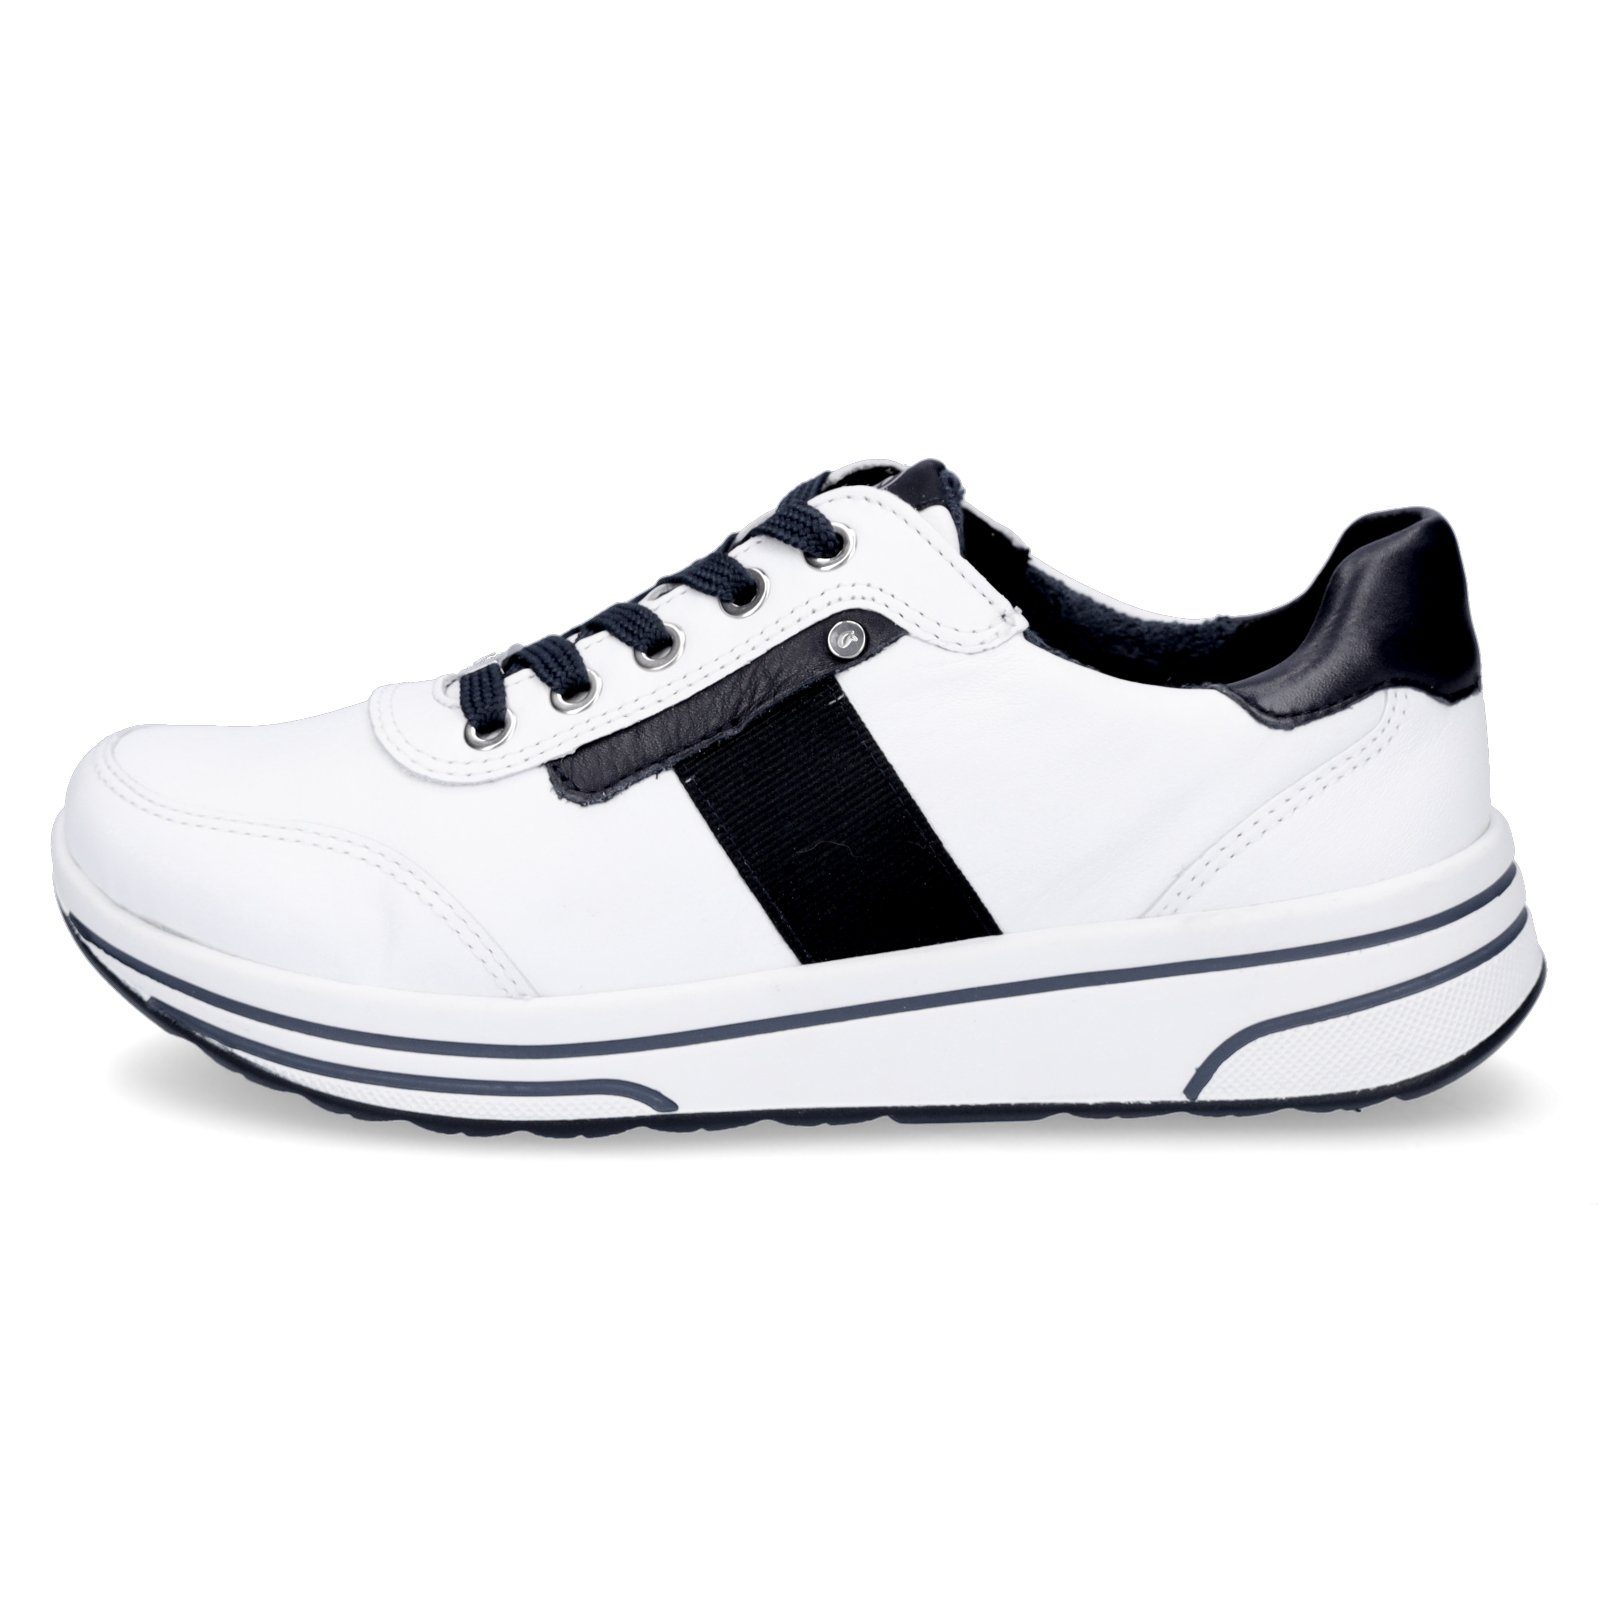 Ara Ara Damen 048117 Sneaker Sneaker weiß weiß Leder blau